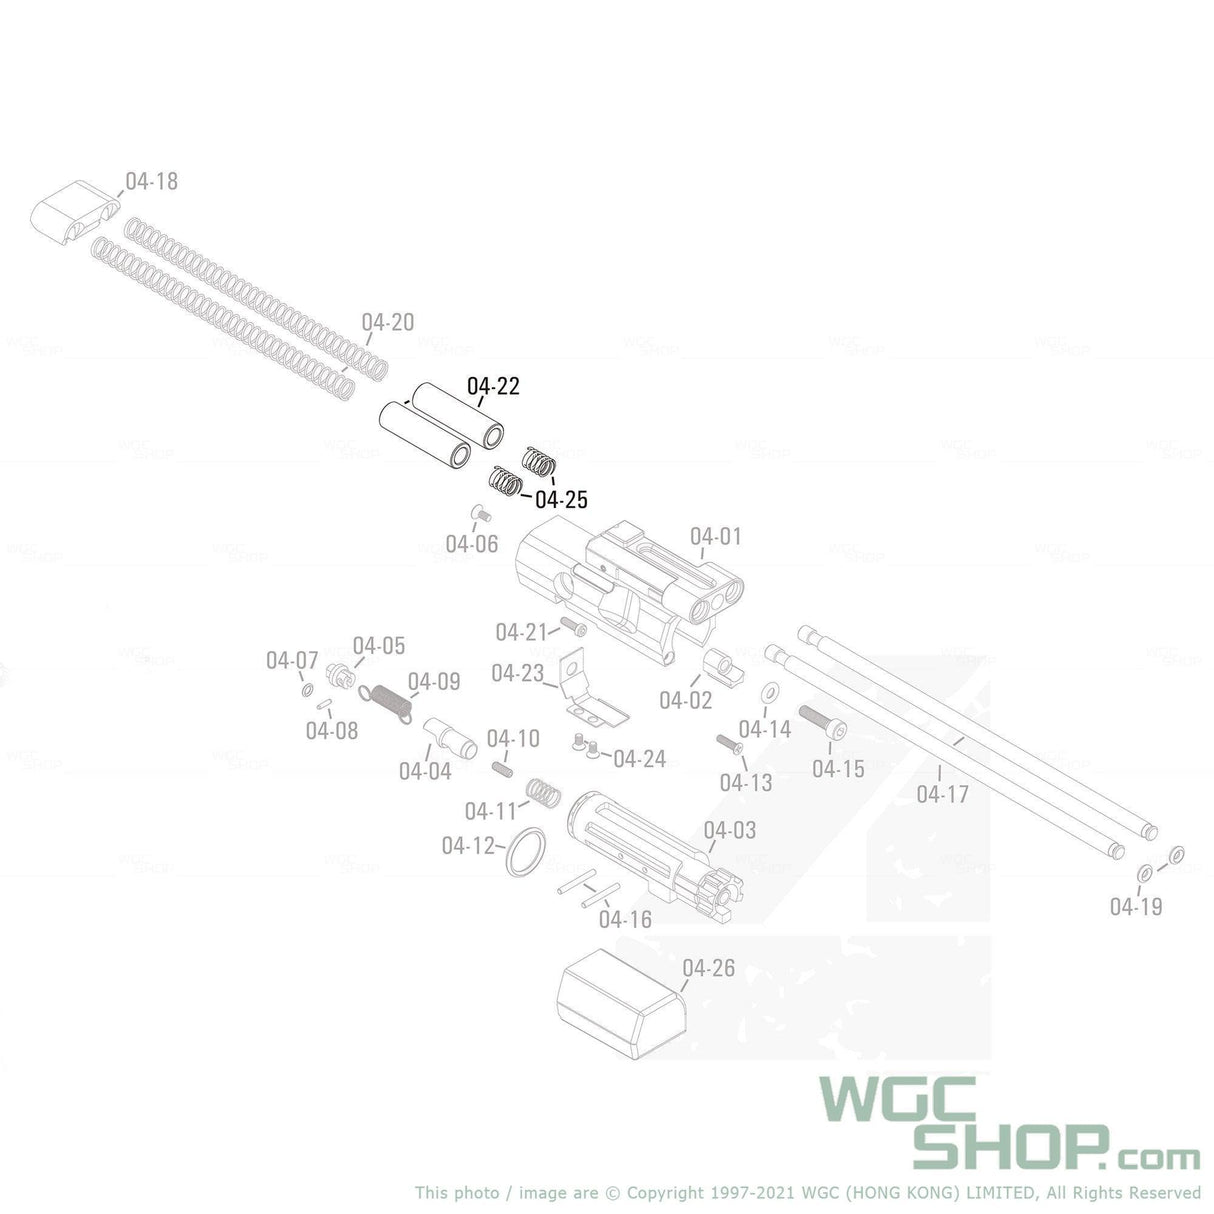 APFG Original Parts - MPX GBB Bolt Clump Weight and Recoil Spring-Short ( 04-22 x 2 / 04-25 x 2 ) - WGC Shop